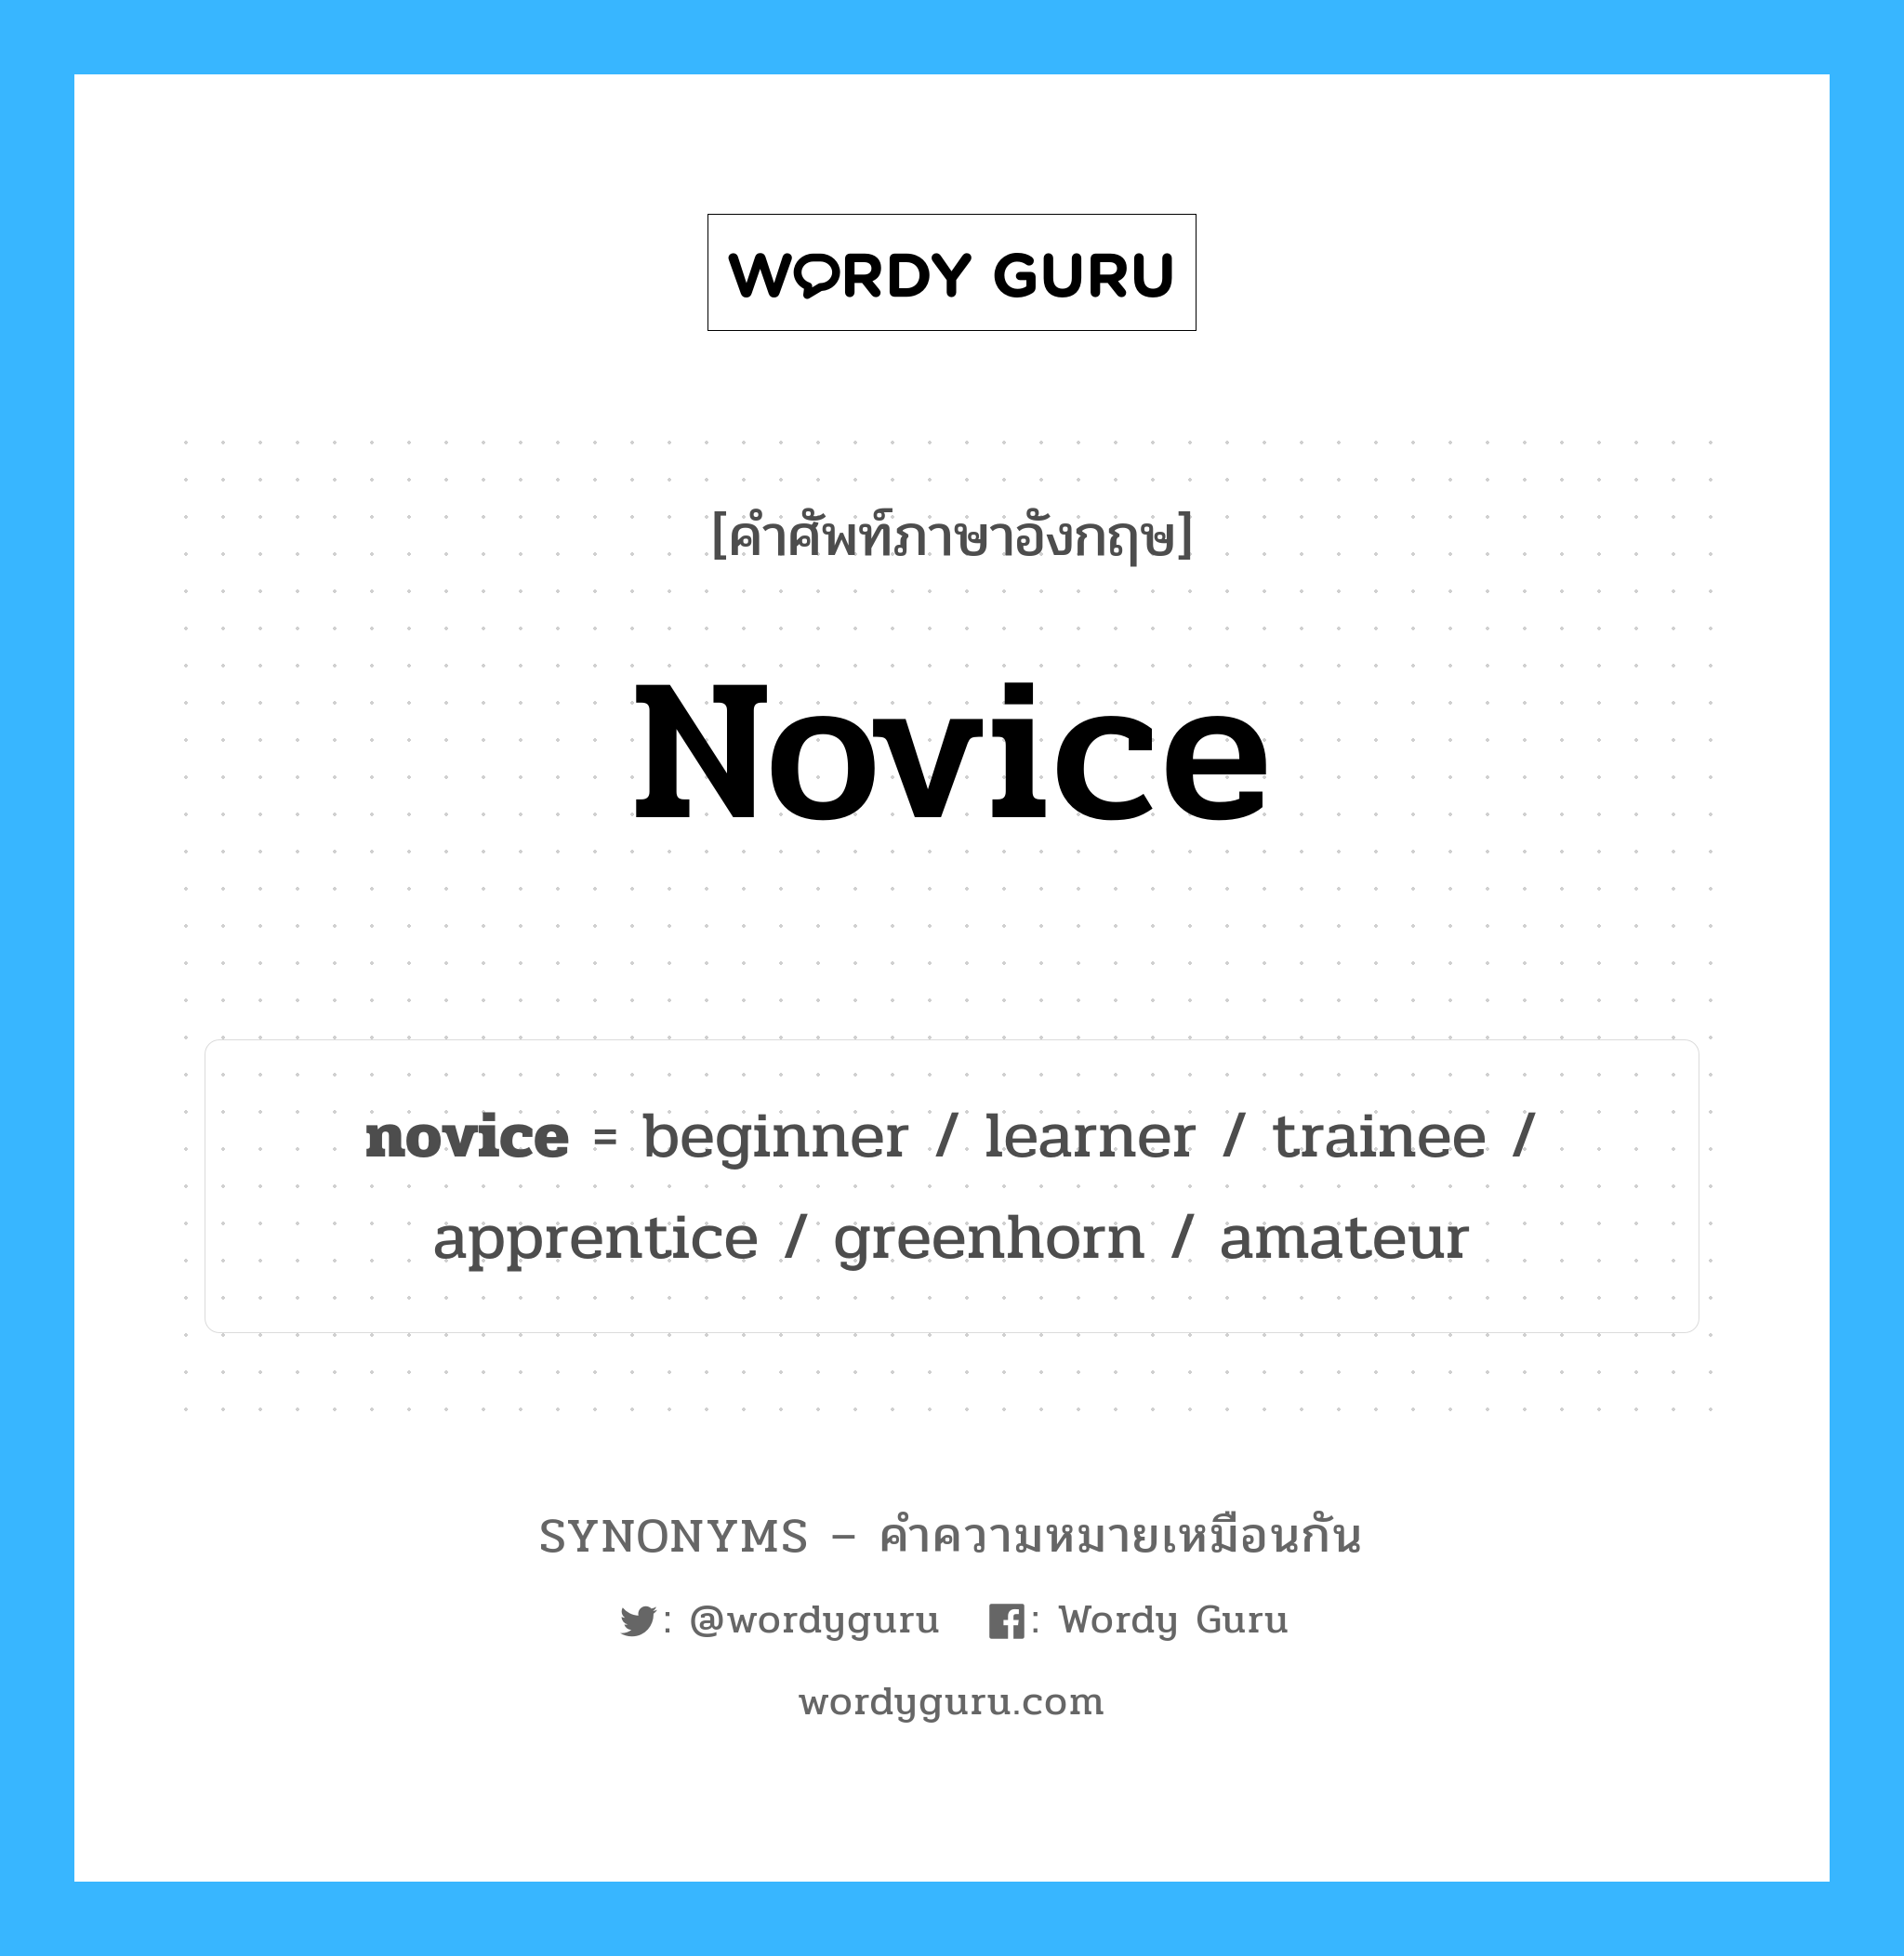 greenhorn เป็นหนึ่งใน novice และมีคำอื่น ๆ อีกดังนี้, คำศัพท์ภาษาอังกฤษ greenhorn ความหมายคล้ายกันกับ novice แปลว่า ไก่อ่อน หมวด novice